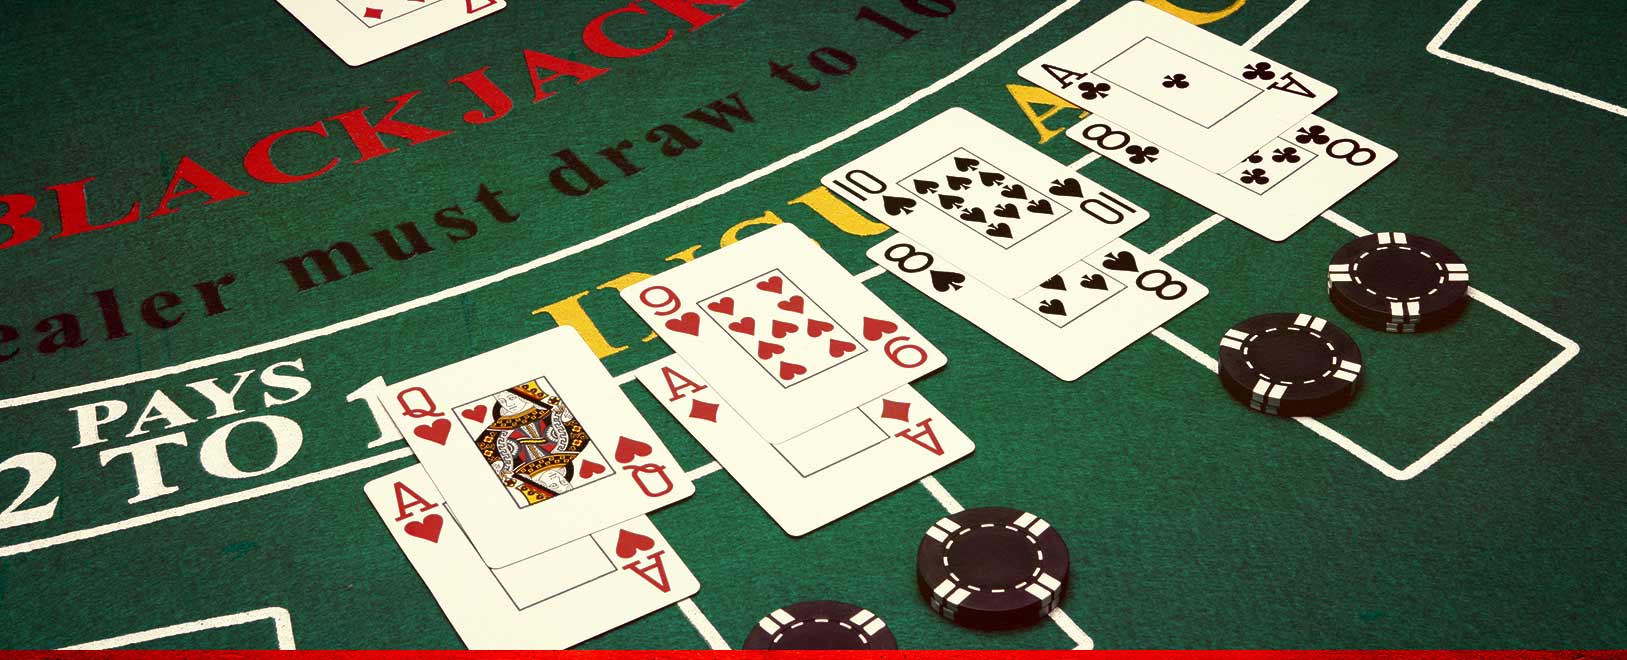 Top 10 Blackjack Tips to Win